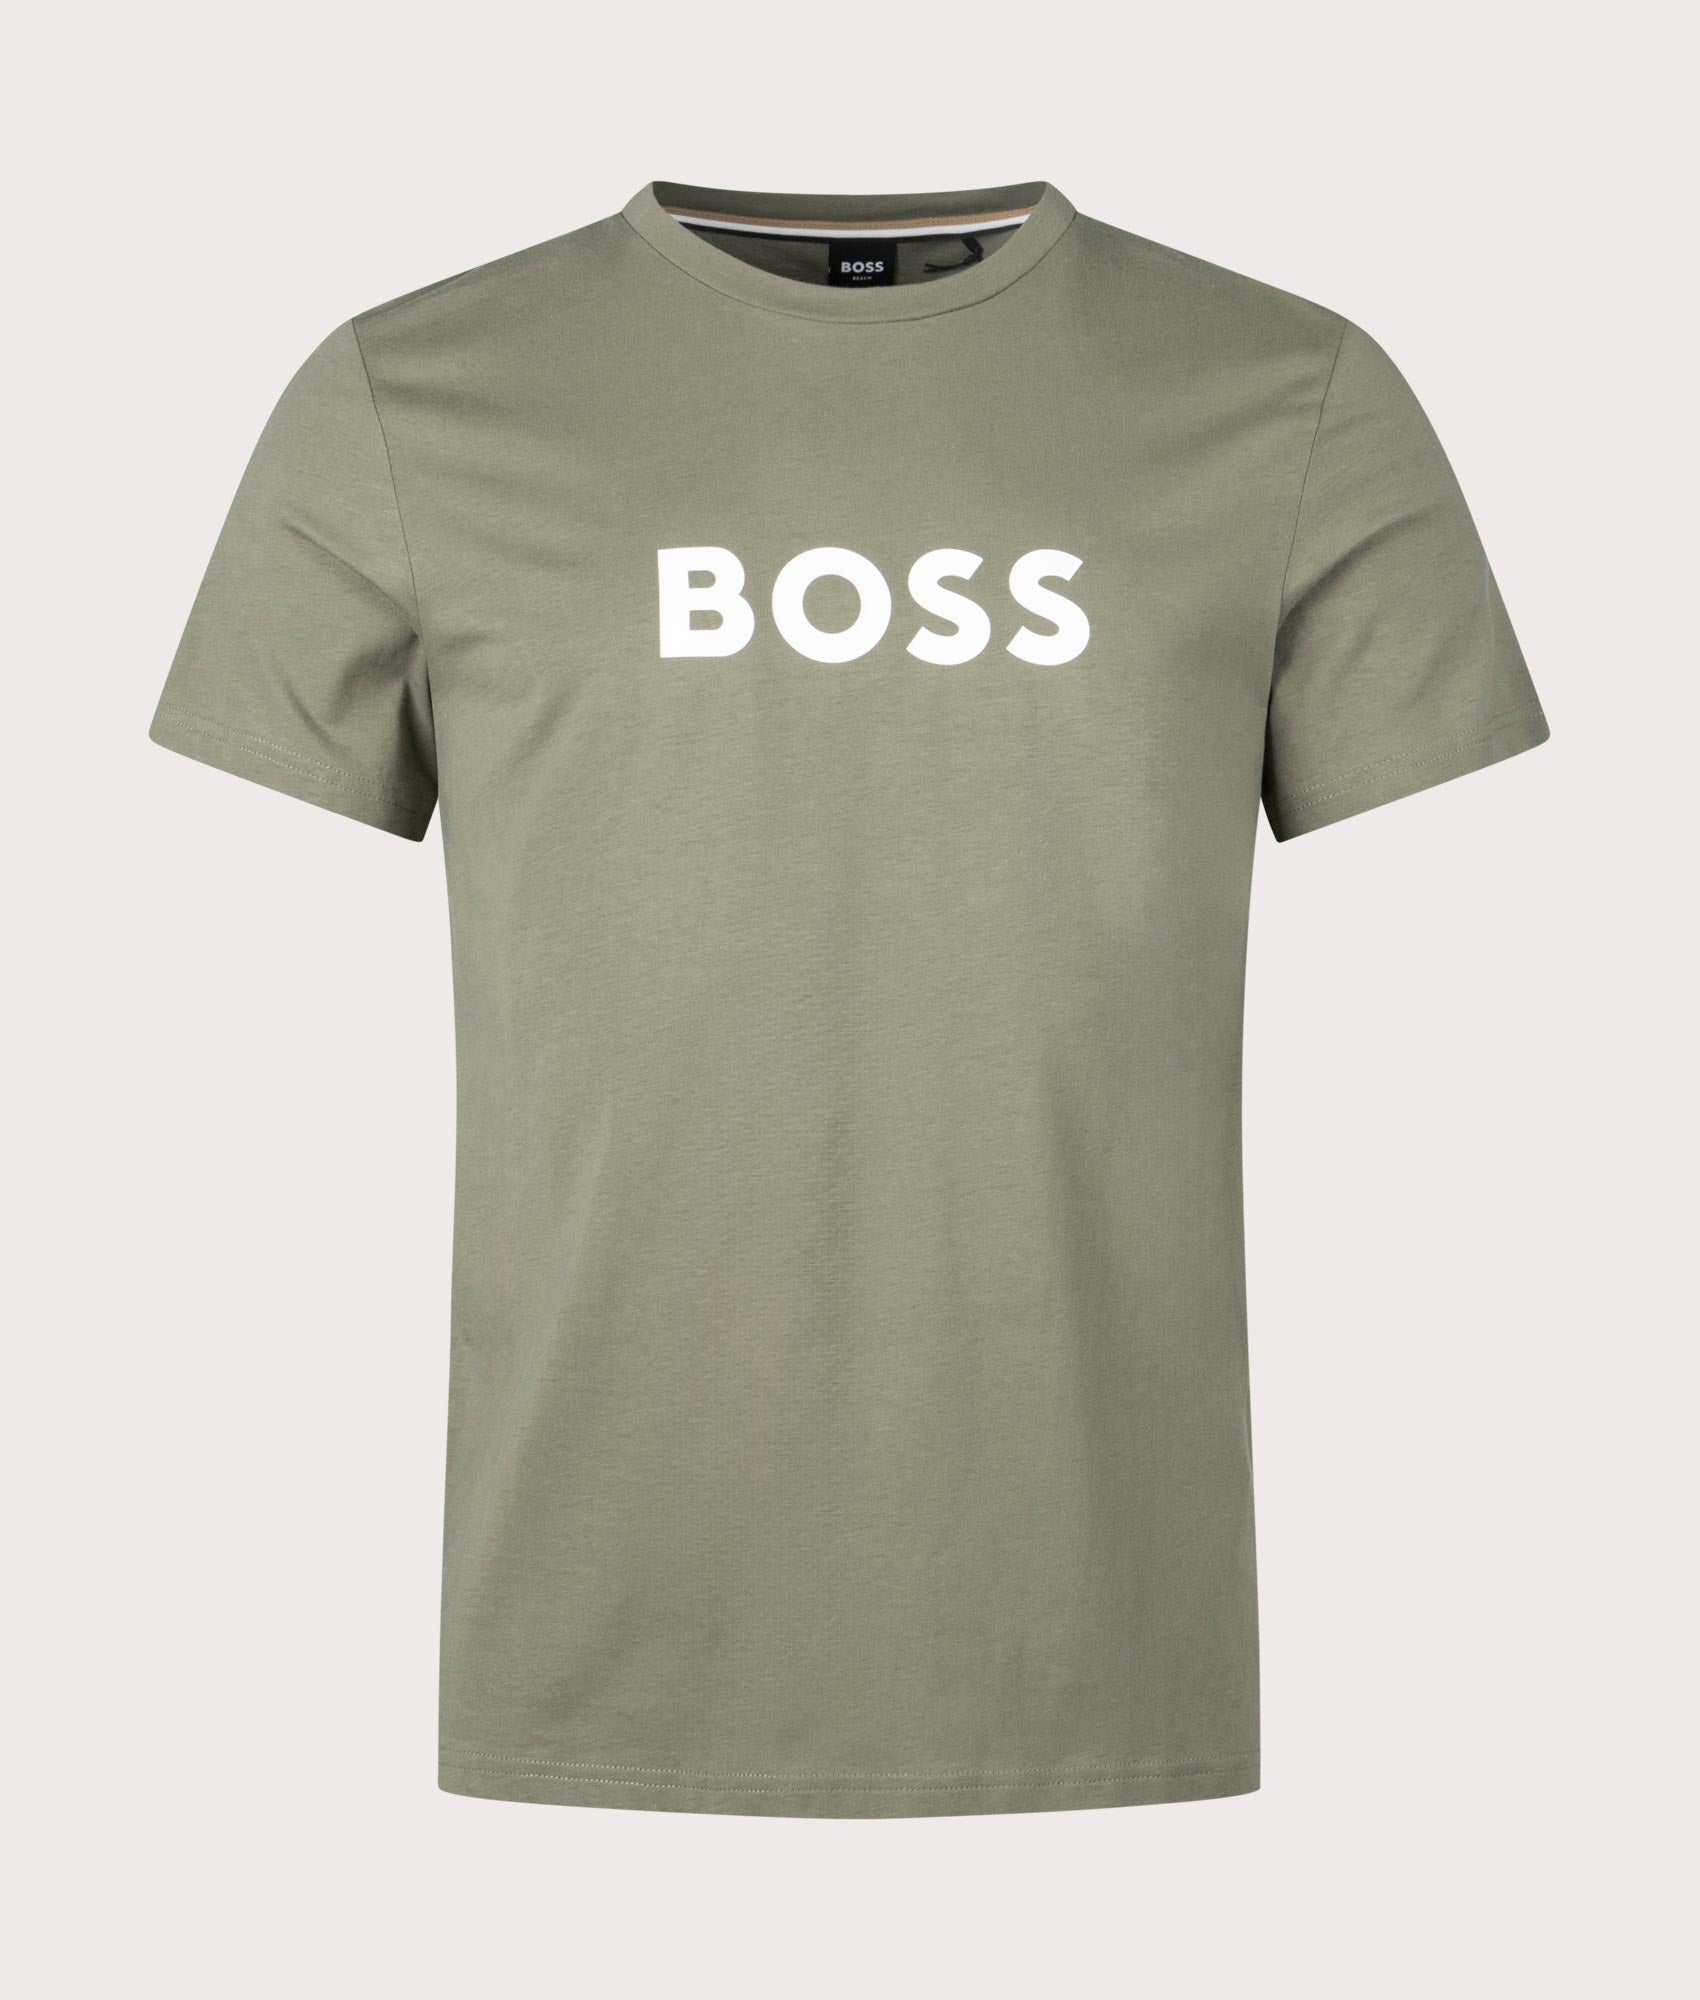 BOSS Mens Round Neck T-Shirt - Colour: 250 Beige/Khaki - Size: Medium